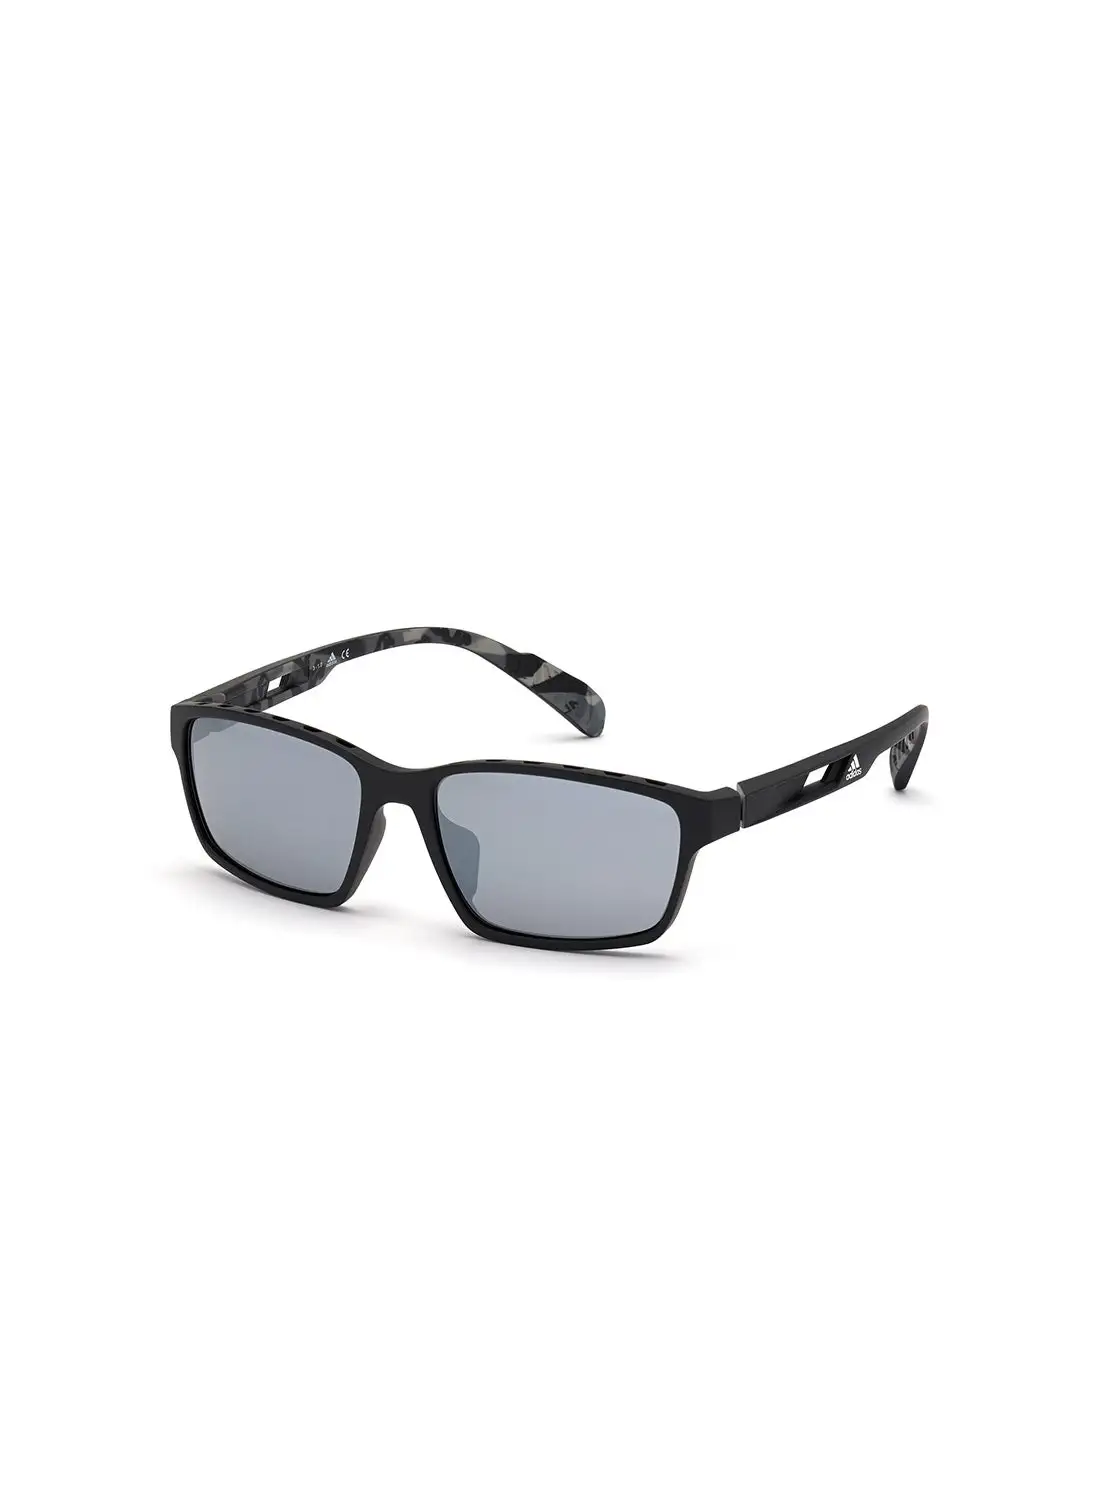 Adidas Unisex UV Protection Sunglasses - SP002402C58 - Lens Size: 58 Mm